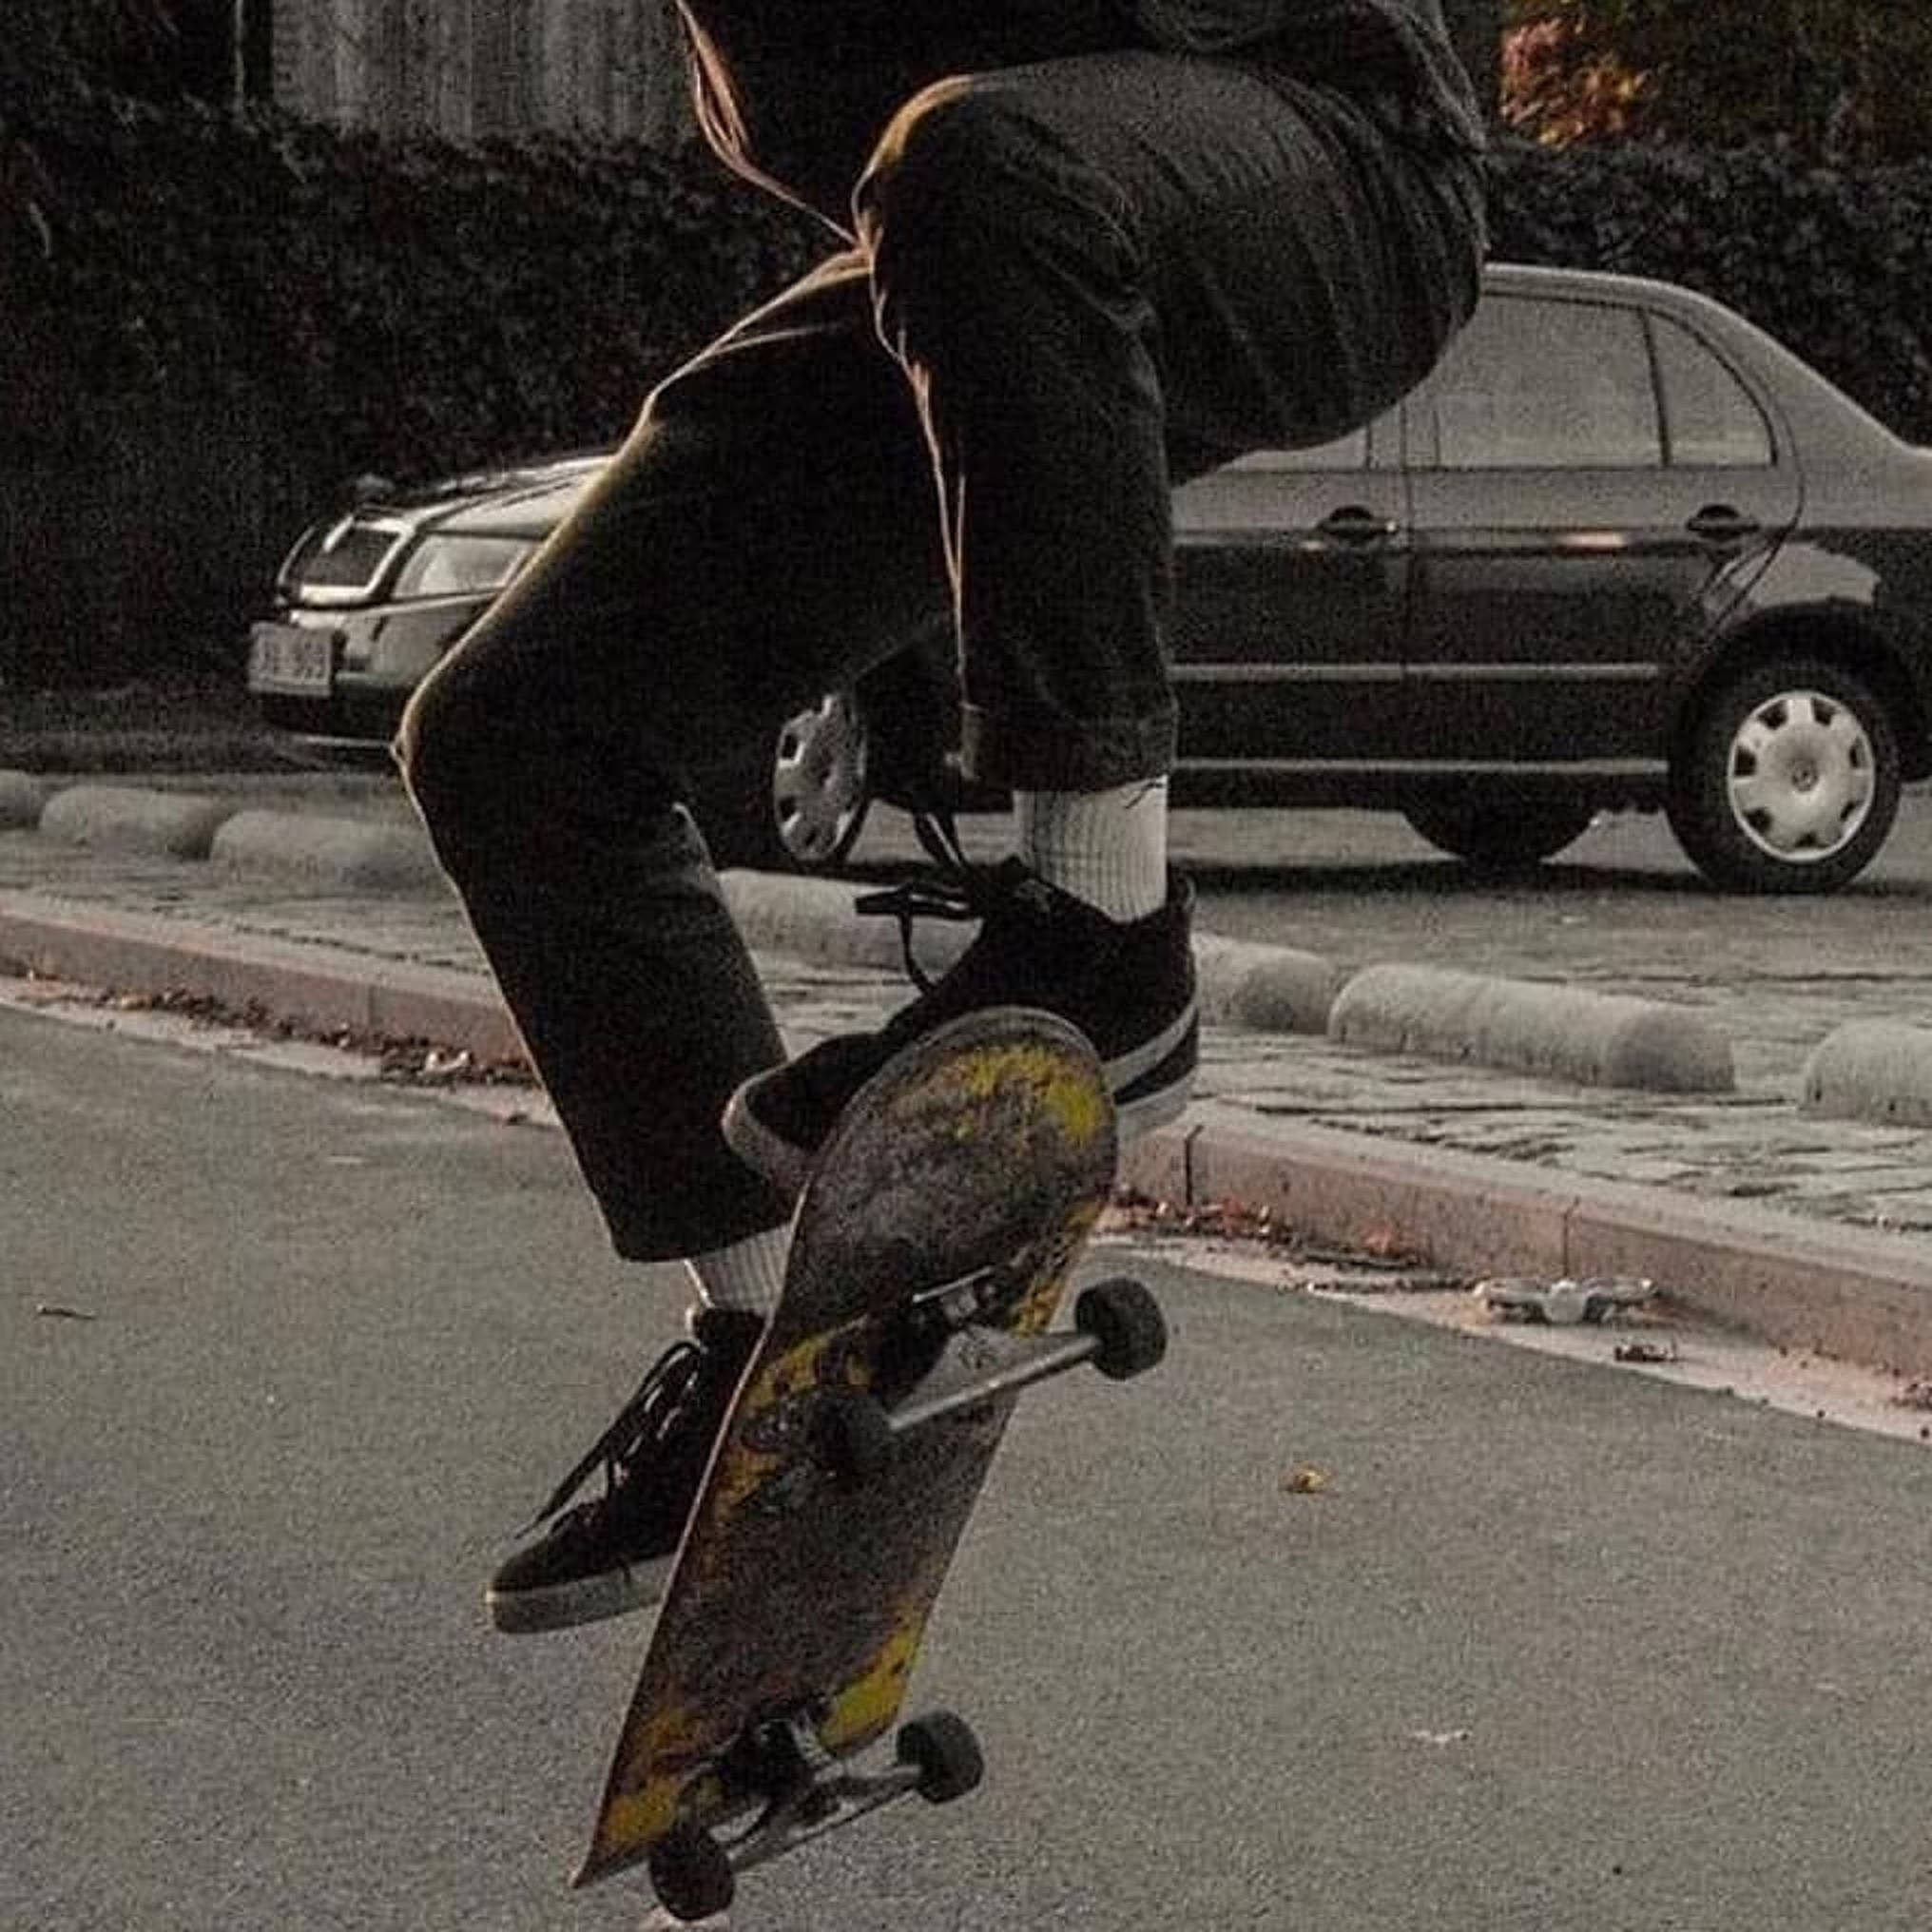 A man is doing tricks on his skateboard - Skate